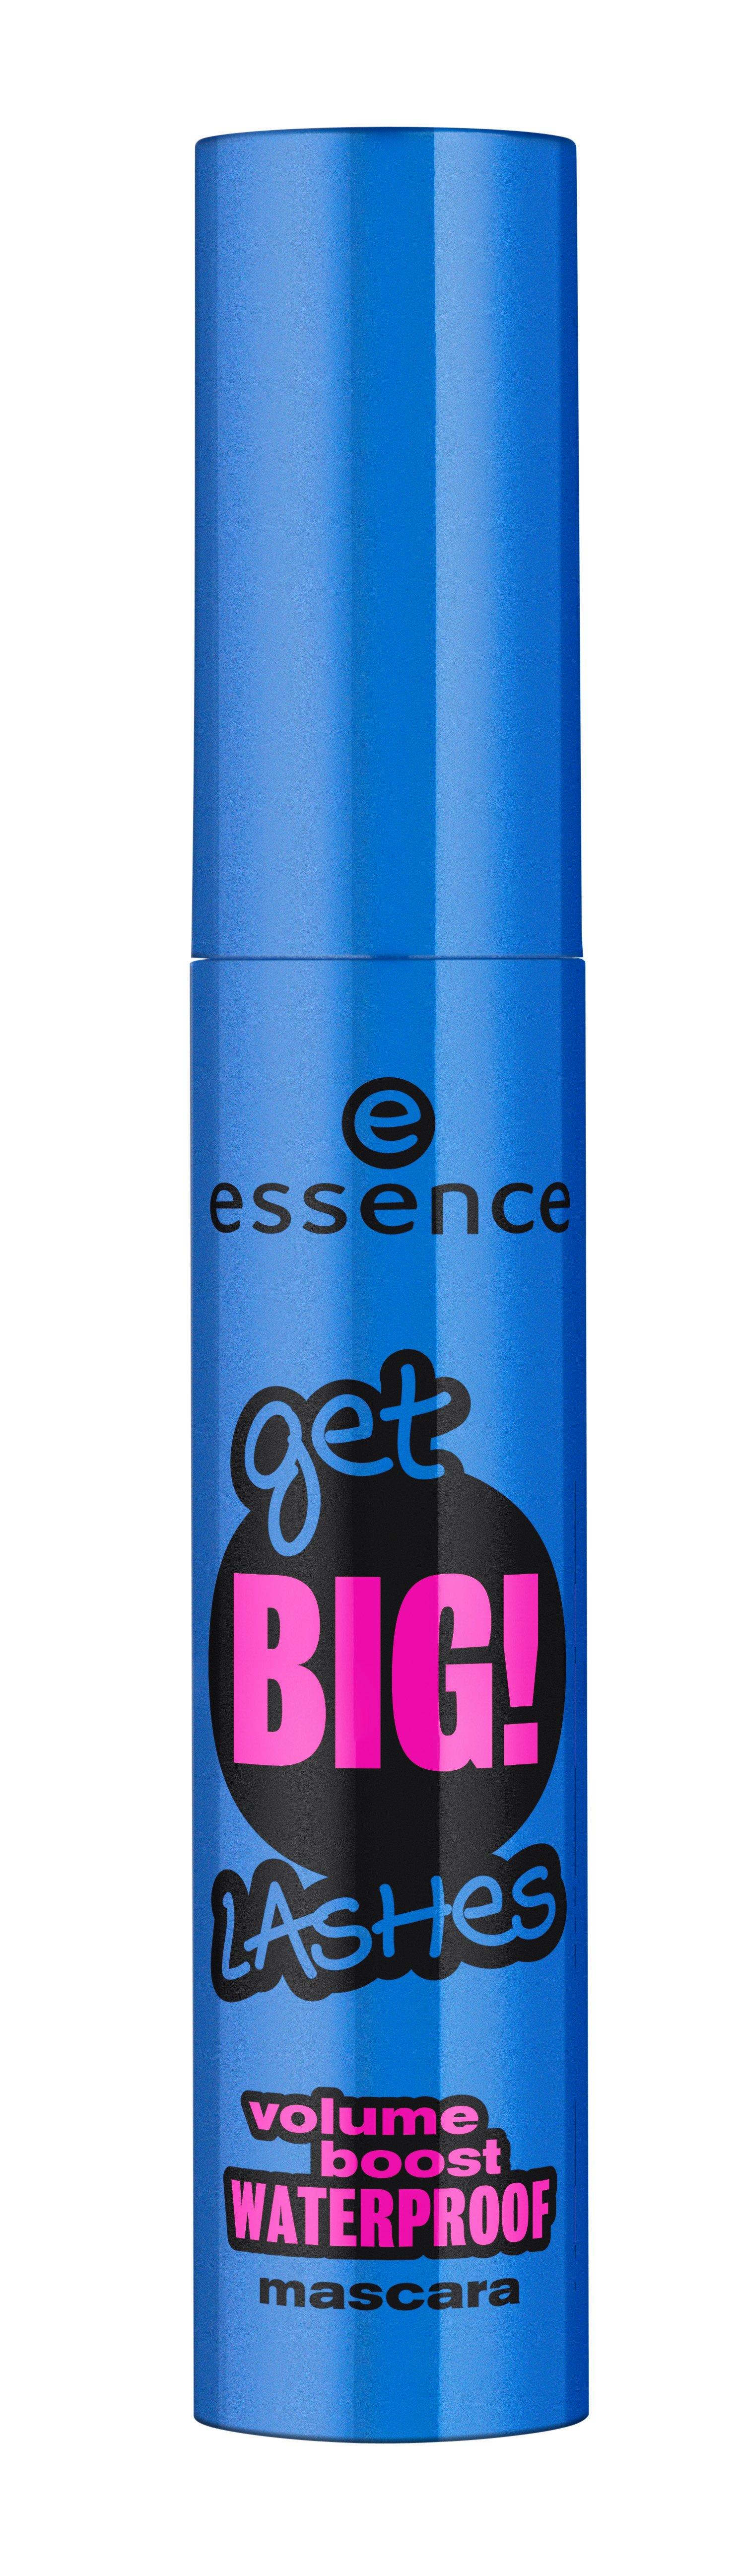 Image of essence Get BIG! Lashes Volume Waterproof Mascara 01 - 12ml